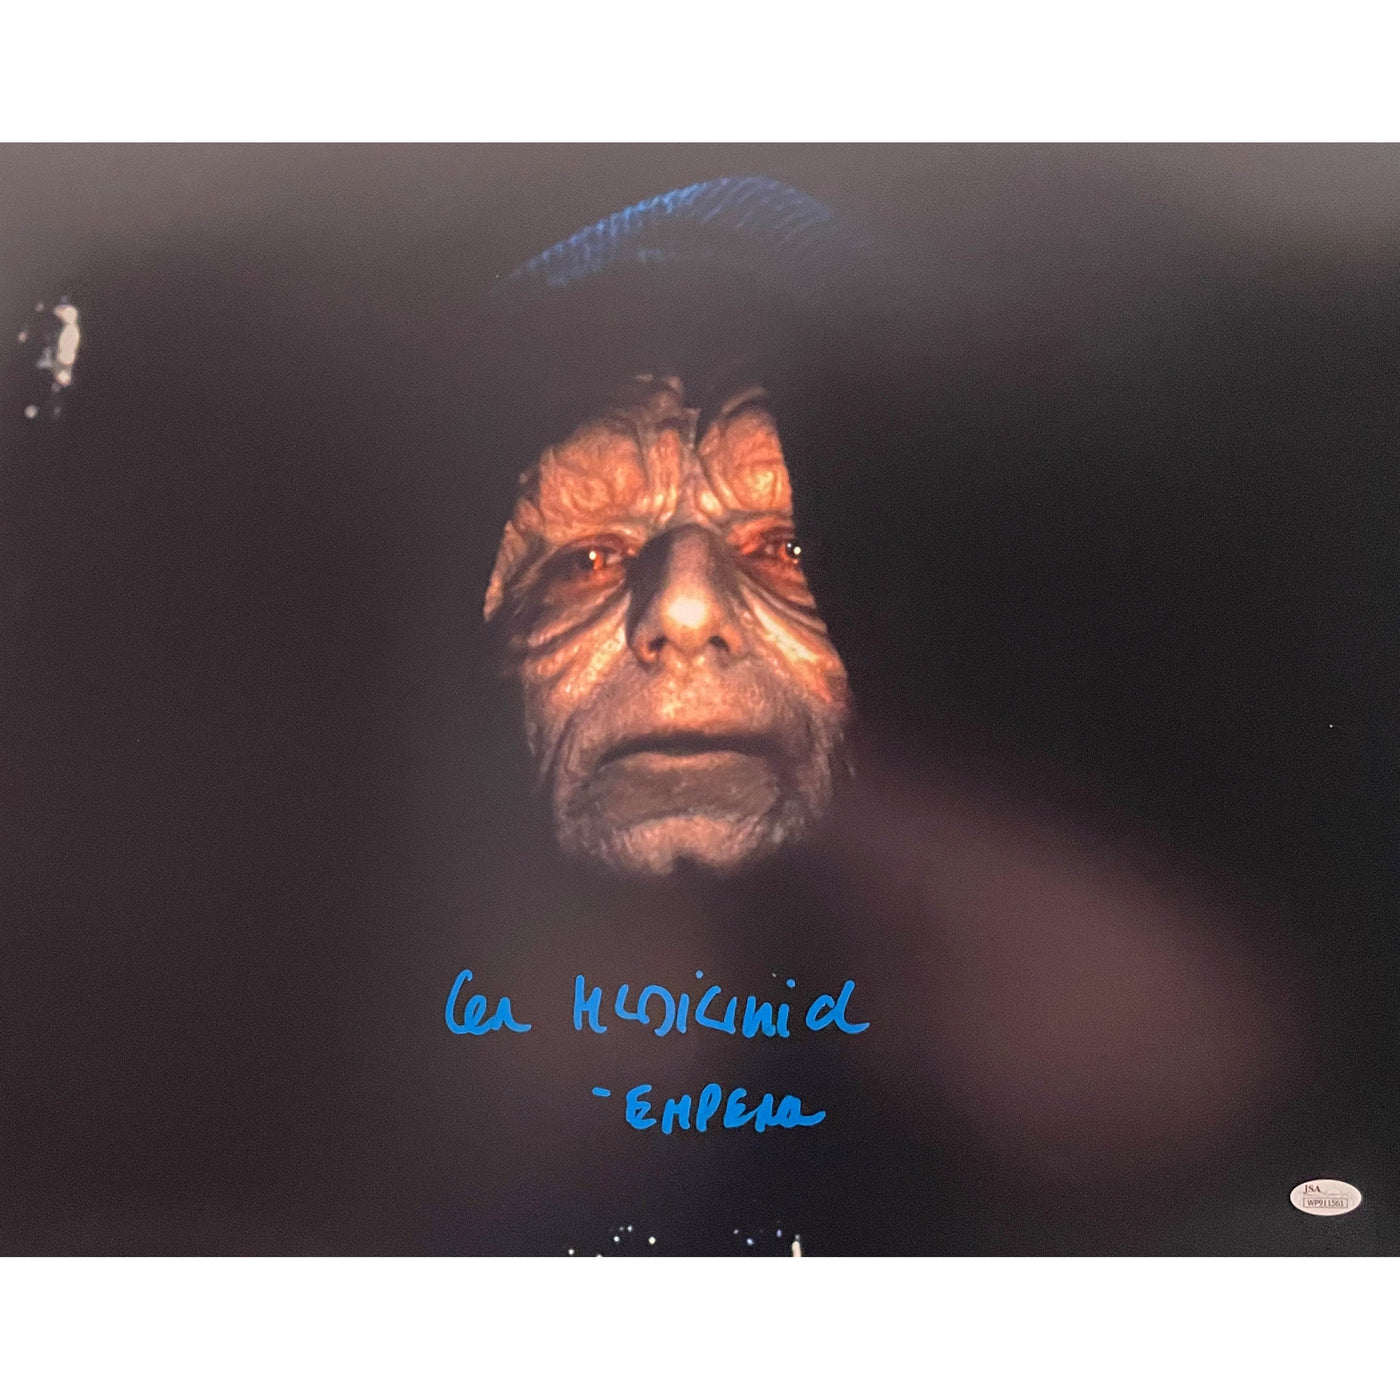 Ian Mcdiarmid Signed 16x20 Photo Star Wars Emperor Autographed JSA COA 10